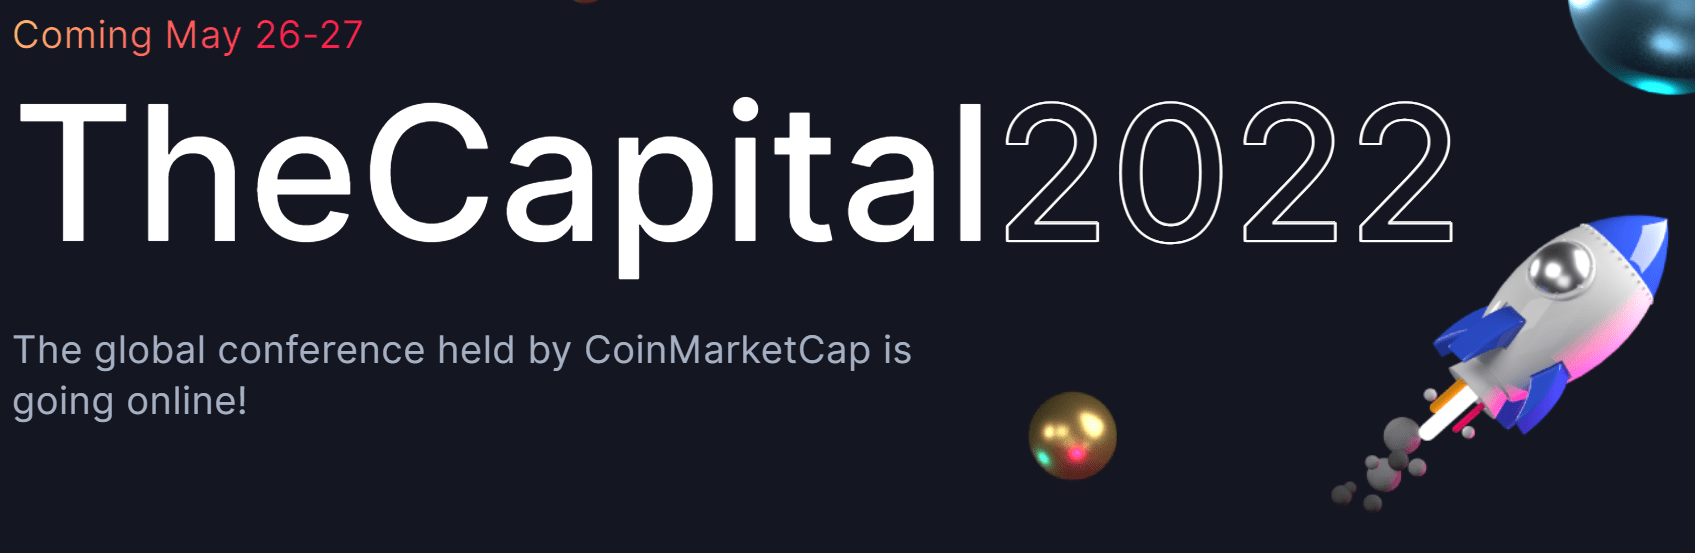 CoinMarketCap: Capitala